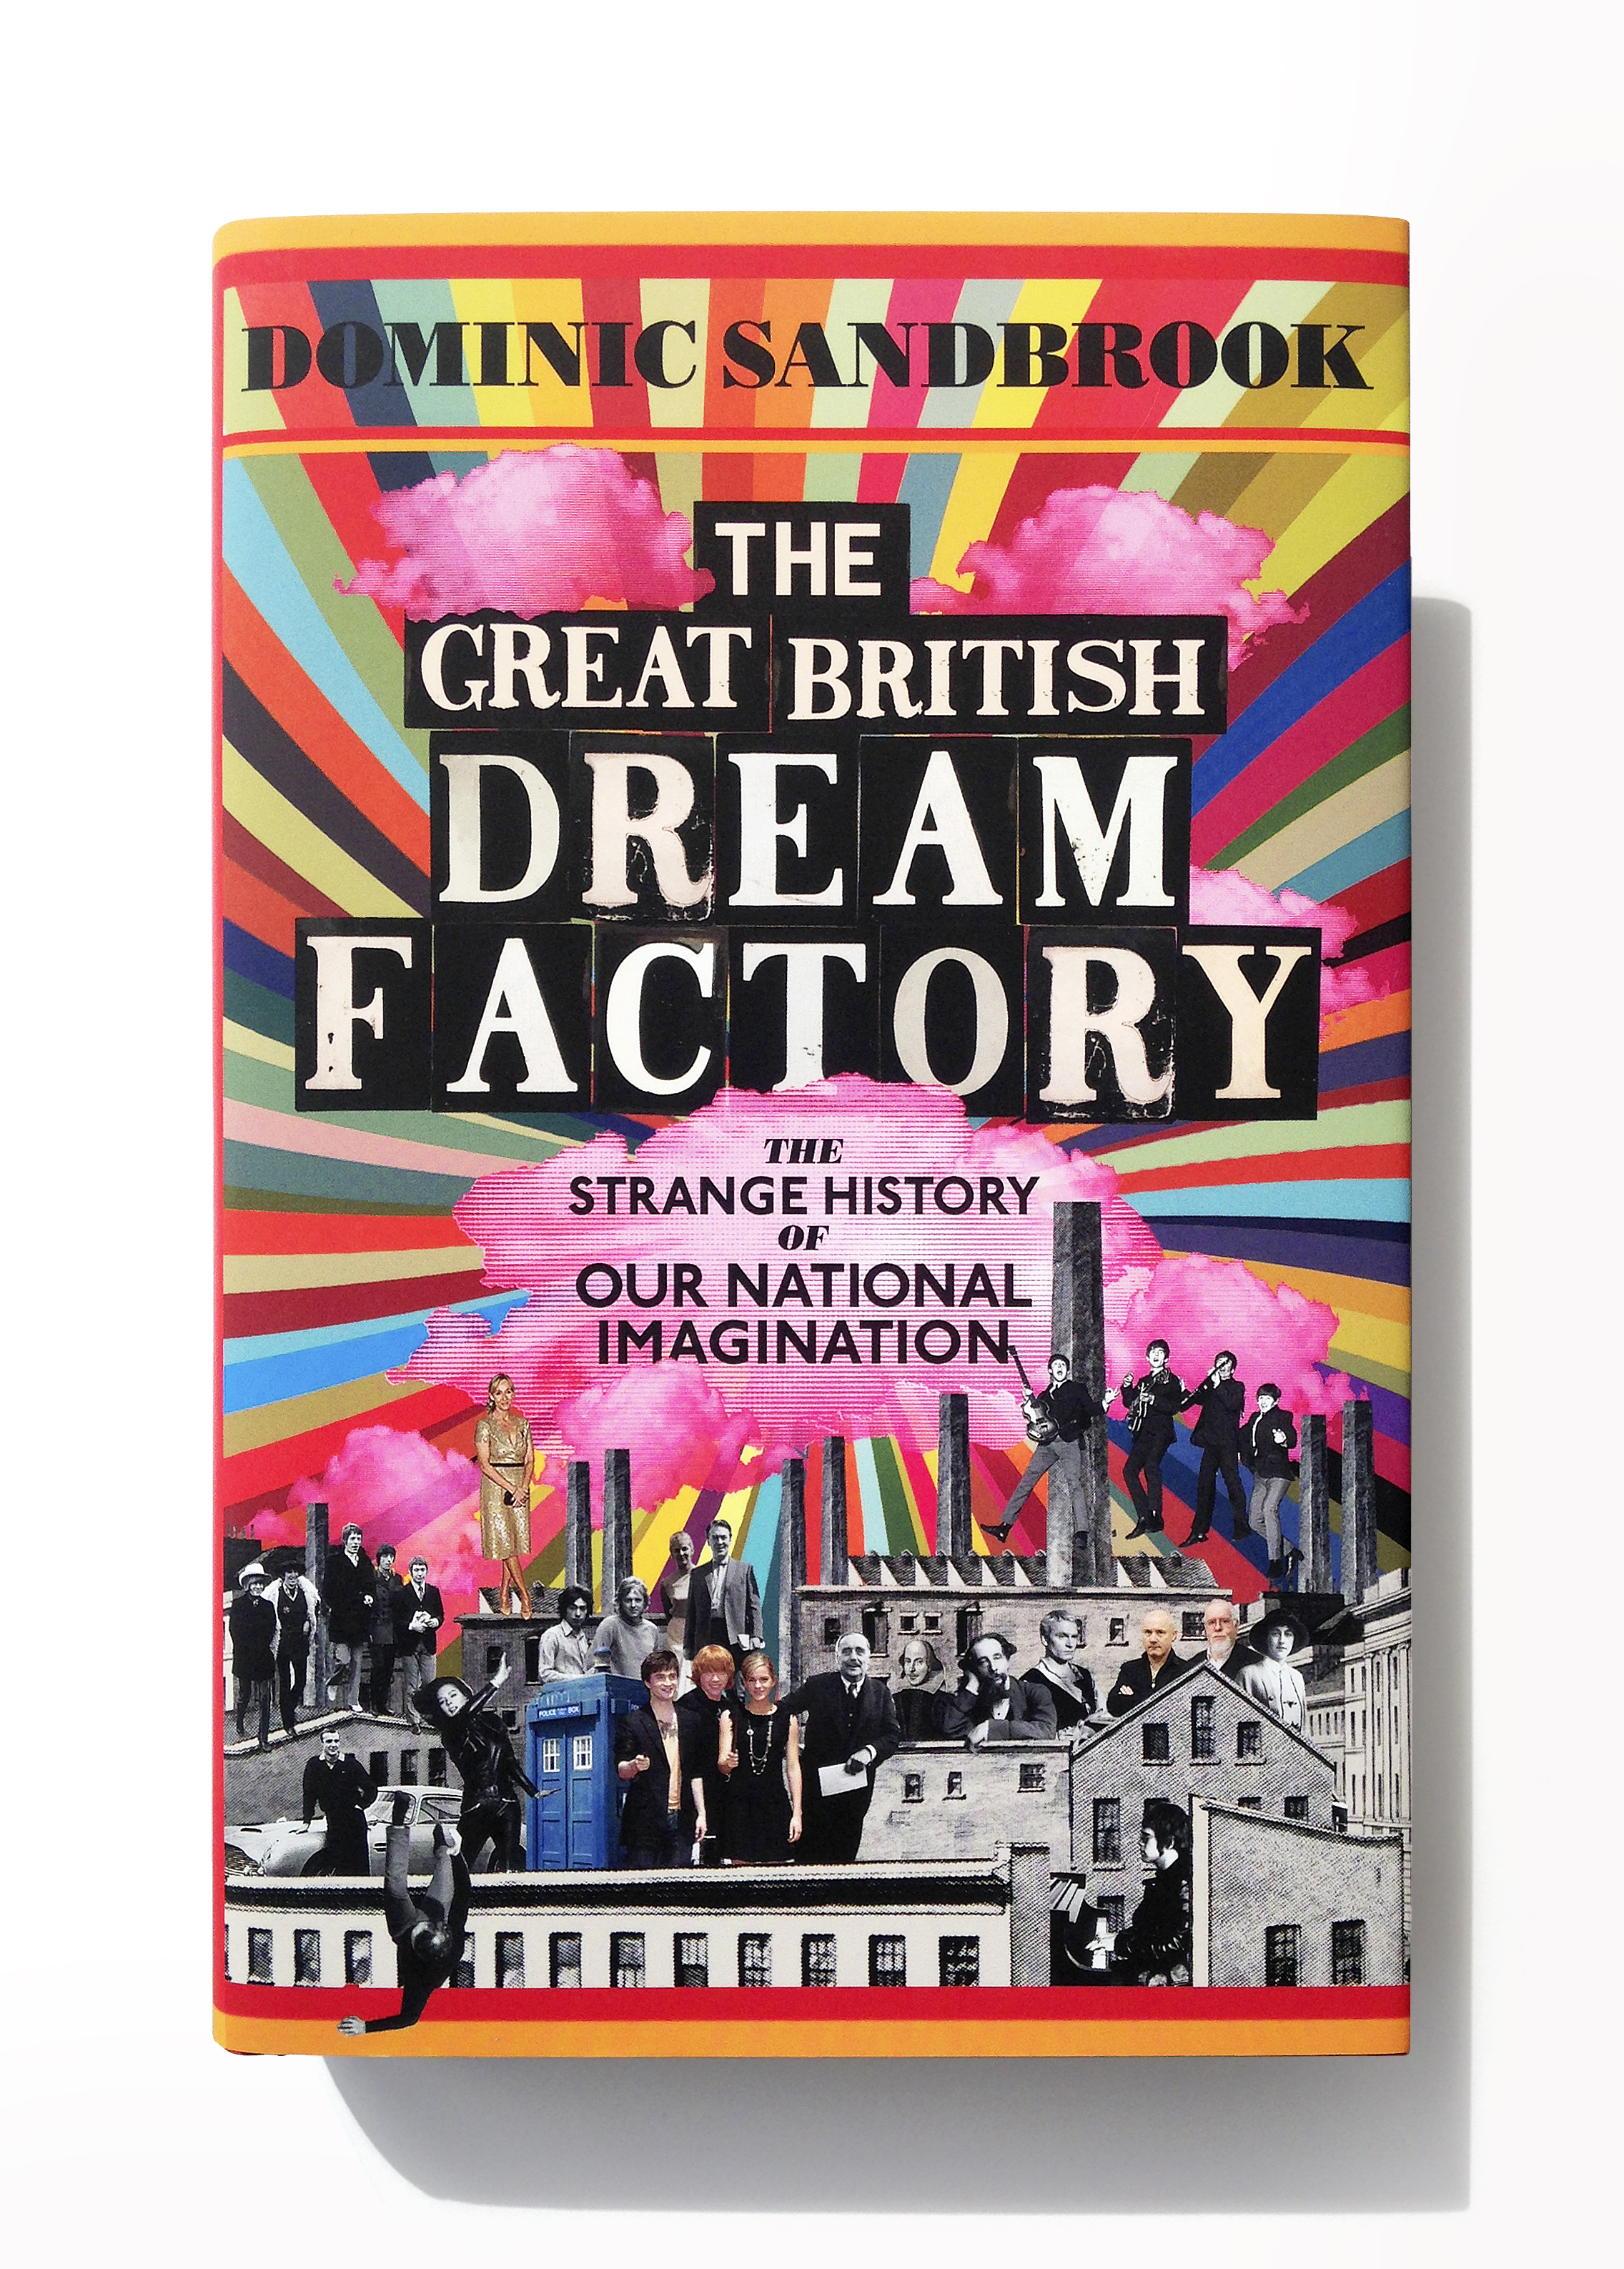  The Great British Dream Factory by Dominic Sandbrook - Design &amp; illustration: Jim Stoddart 